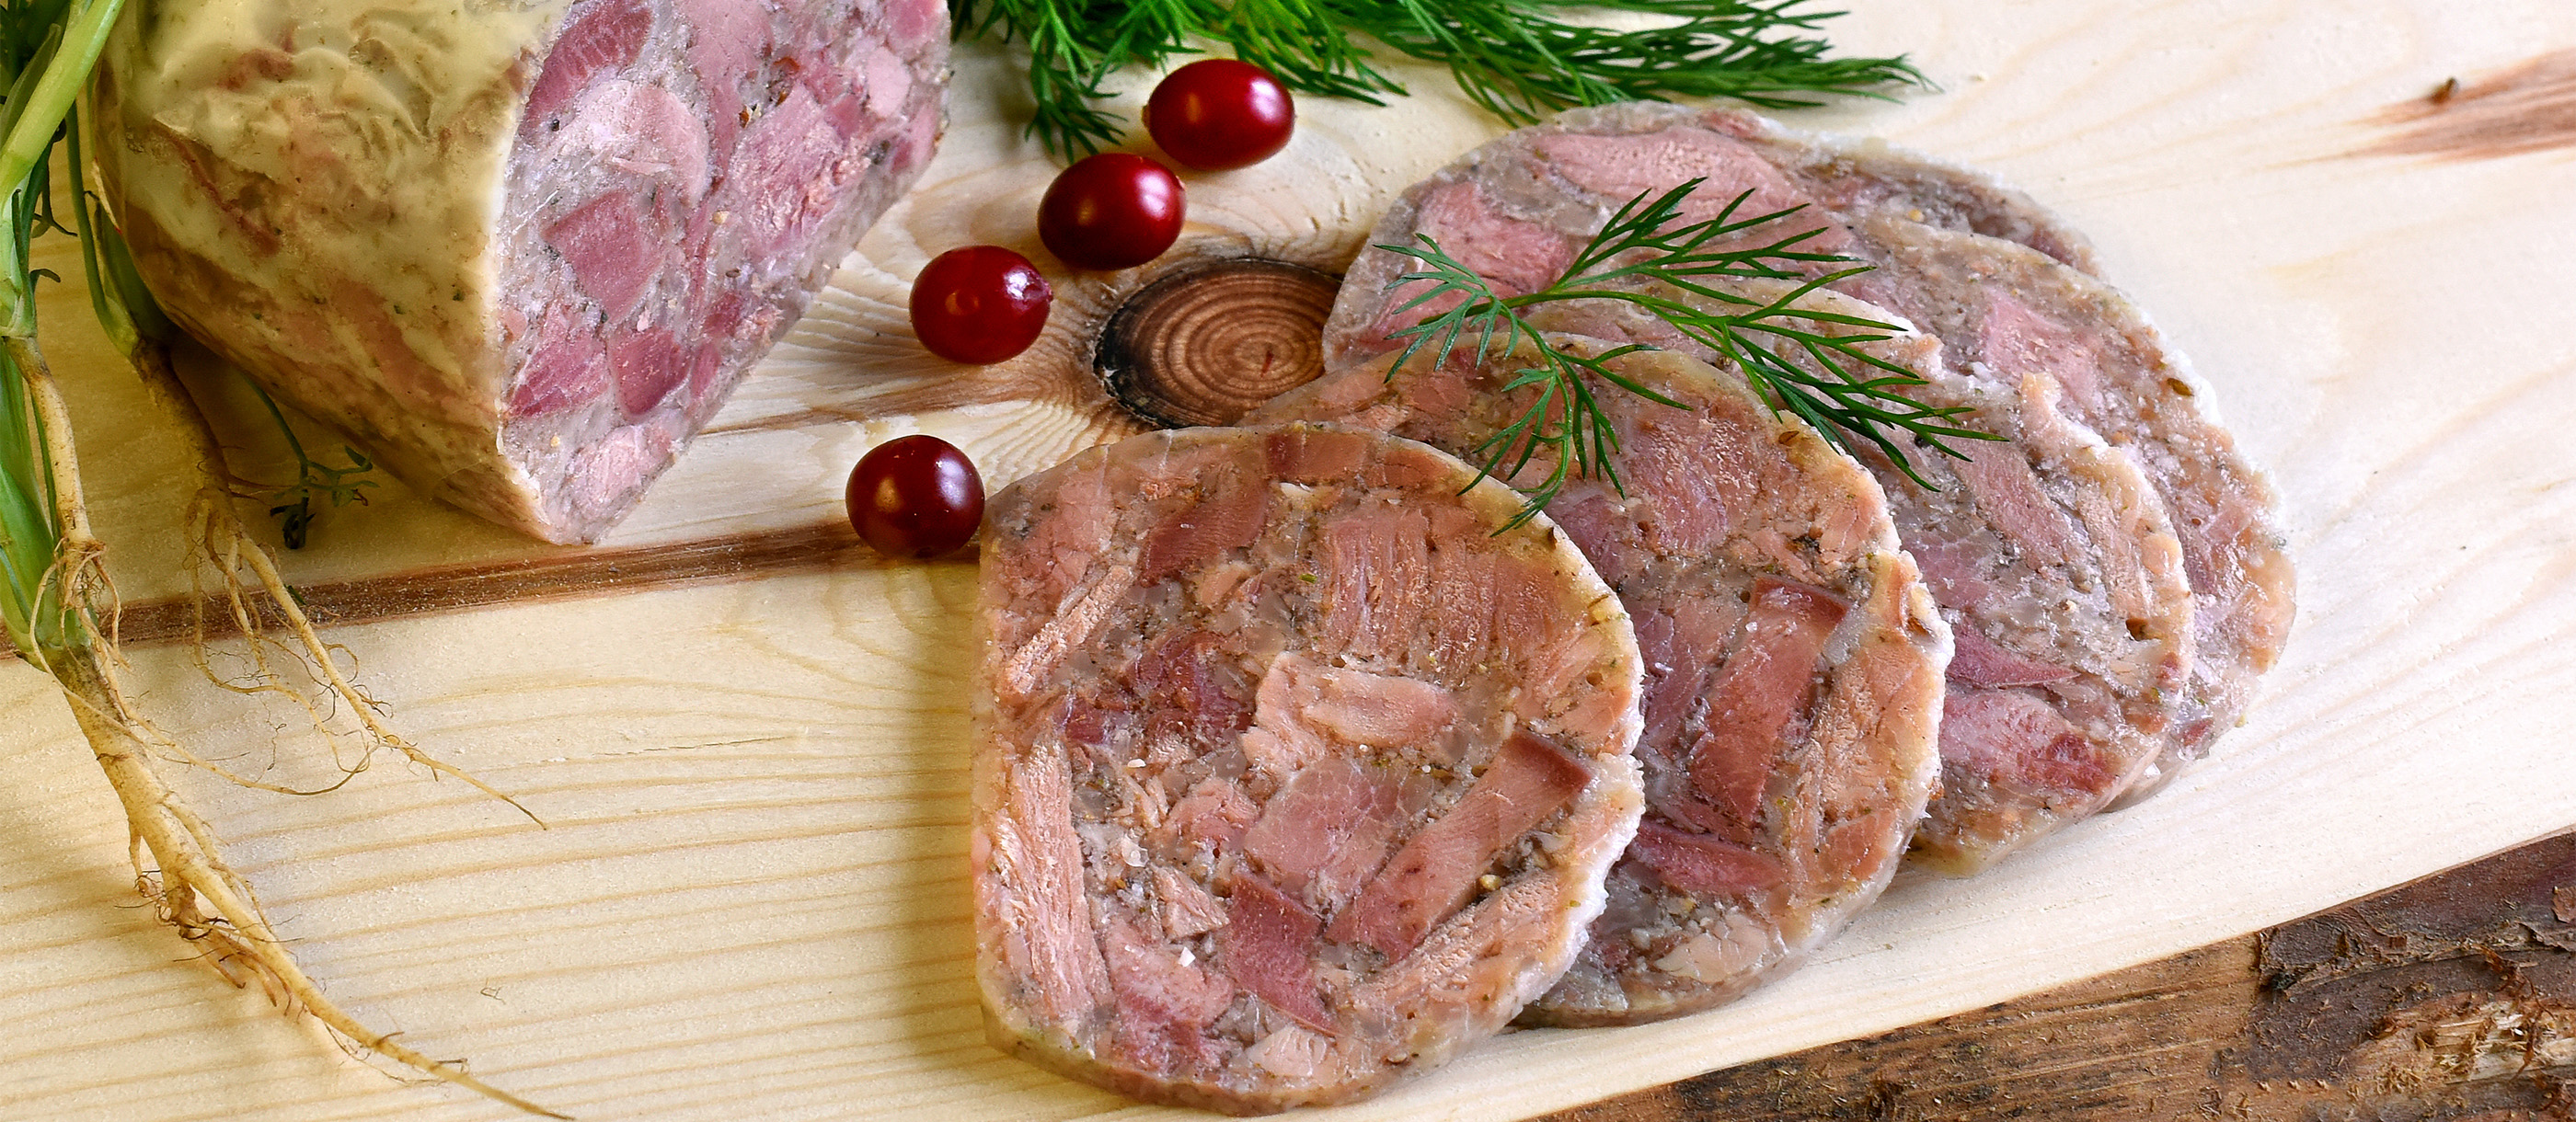 10 Most Popular German Meat Products - TasteAtlas